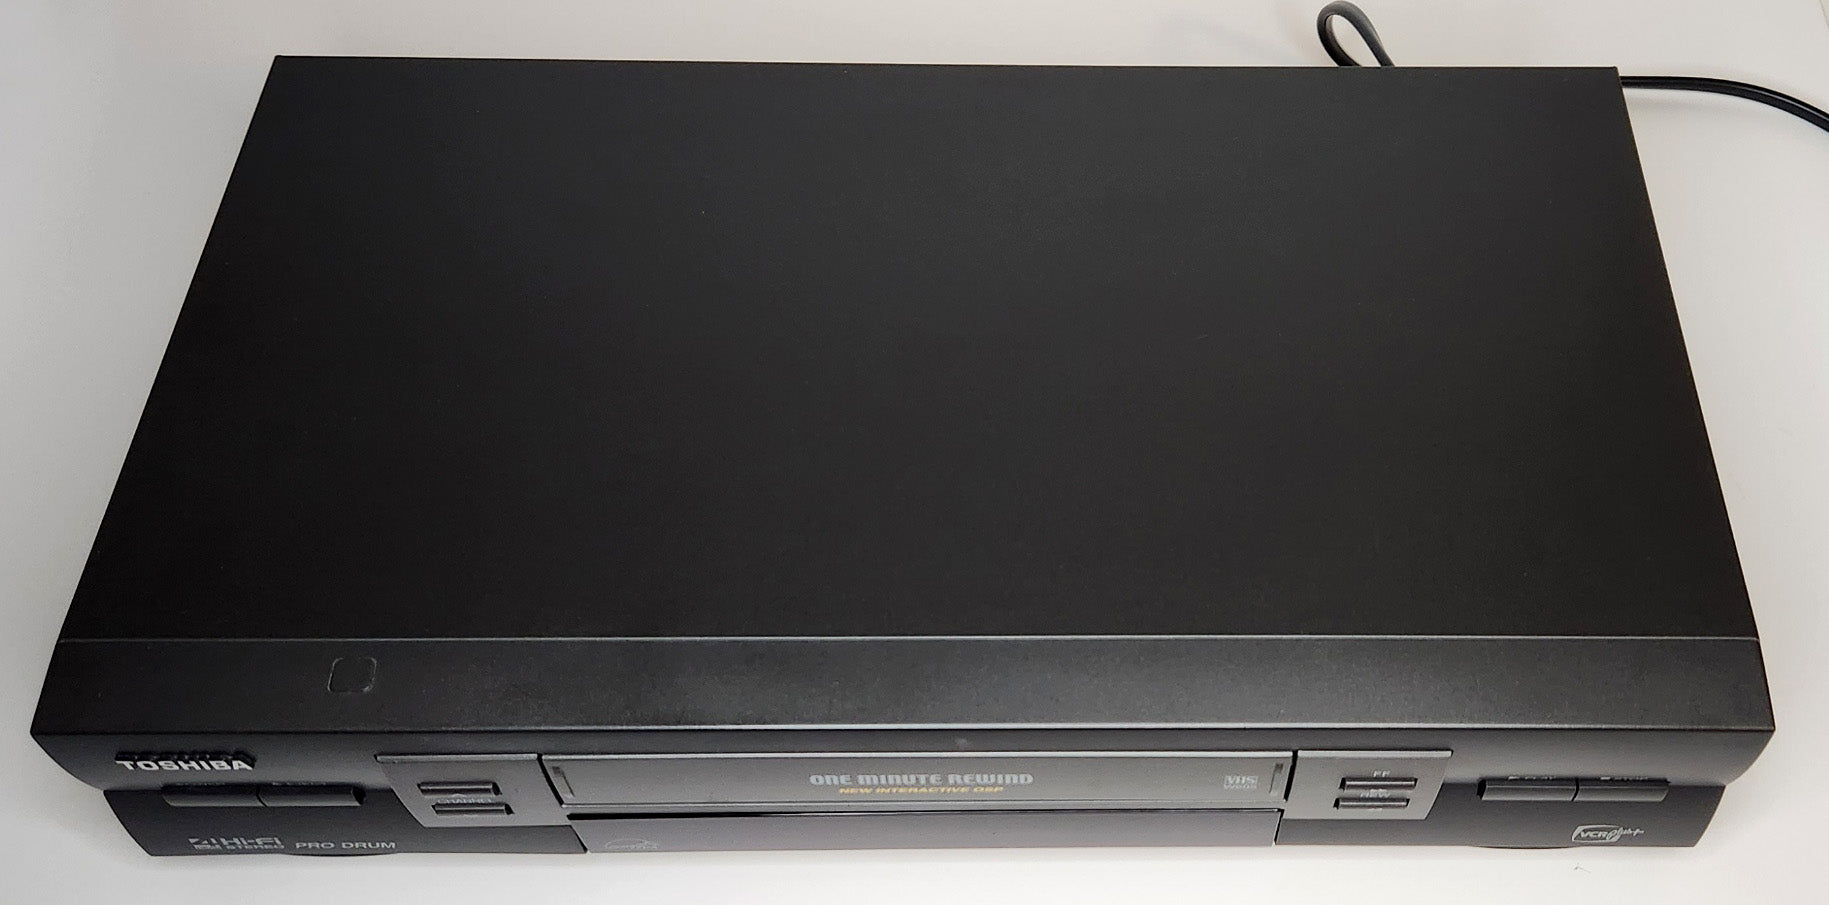 Toshiba W-605 VCR, 4-Head Hi-Fi Stereo - Top